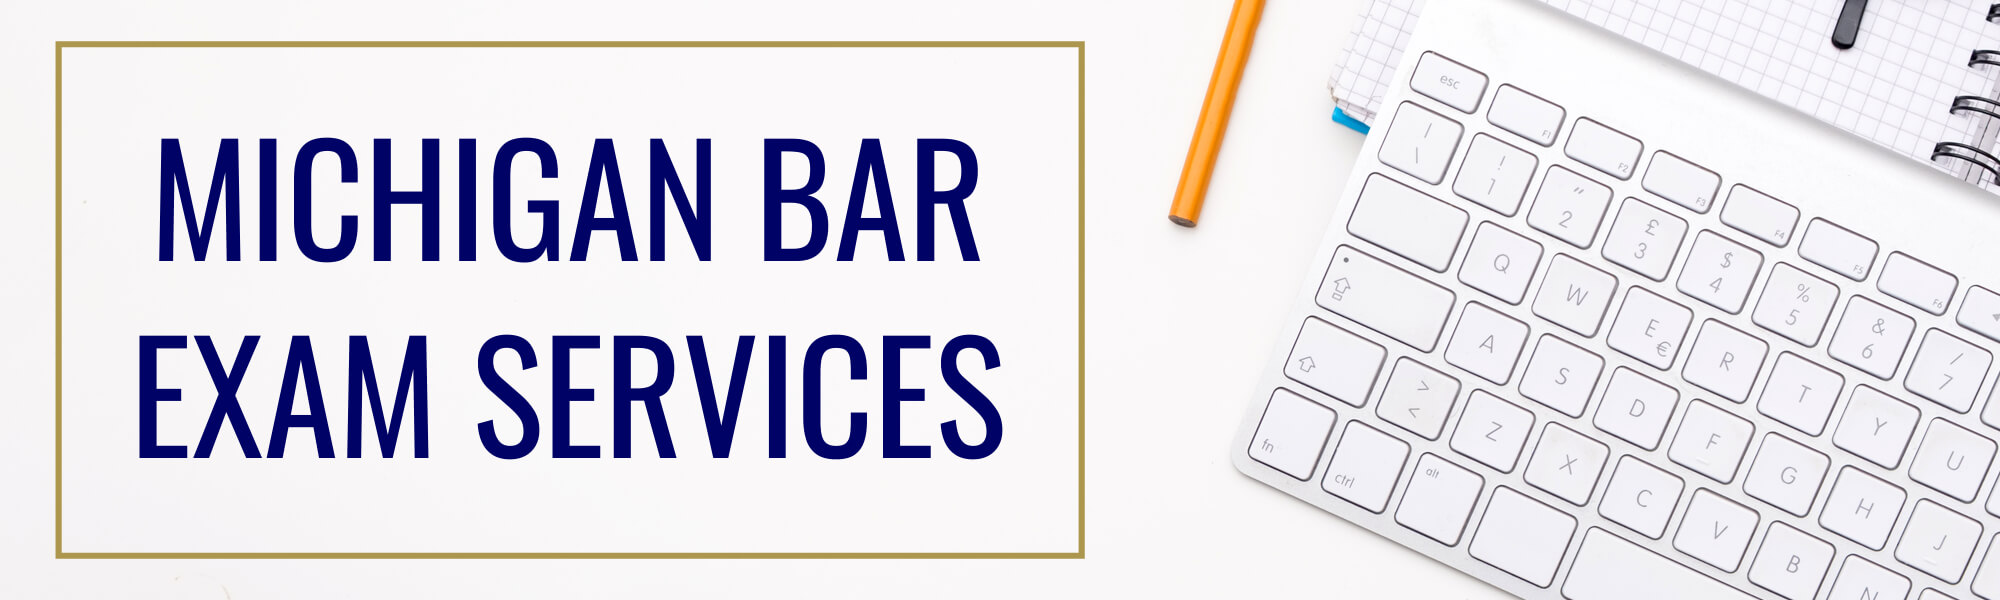 Michigan Bar Exam Services JD Advising